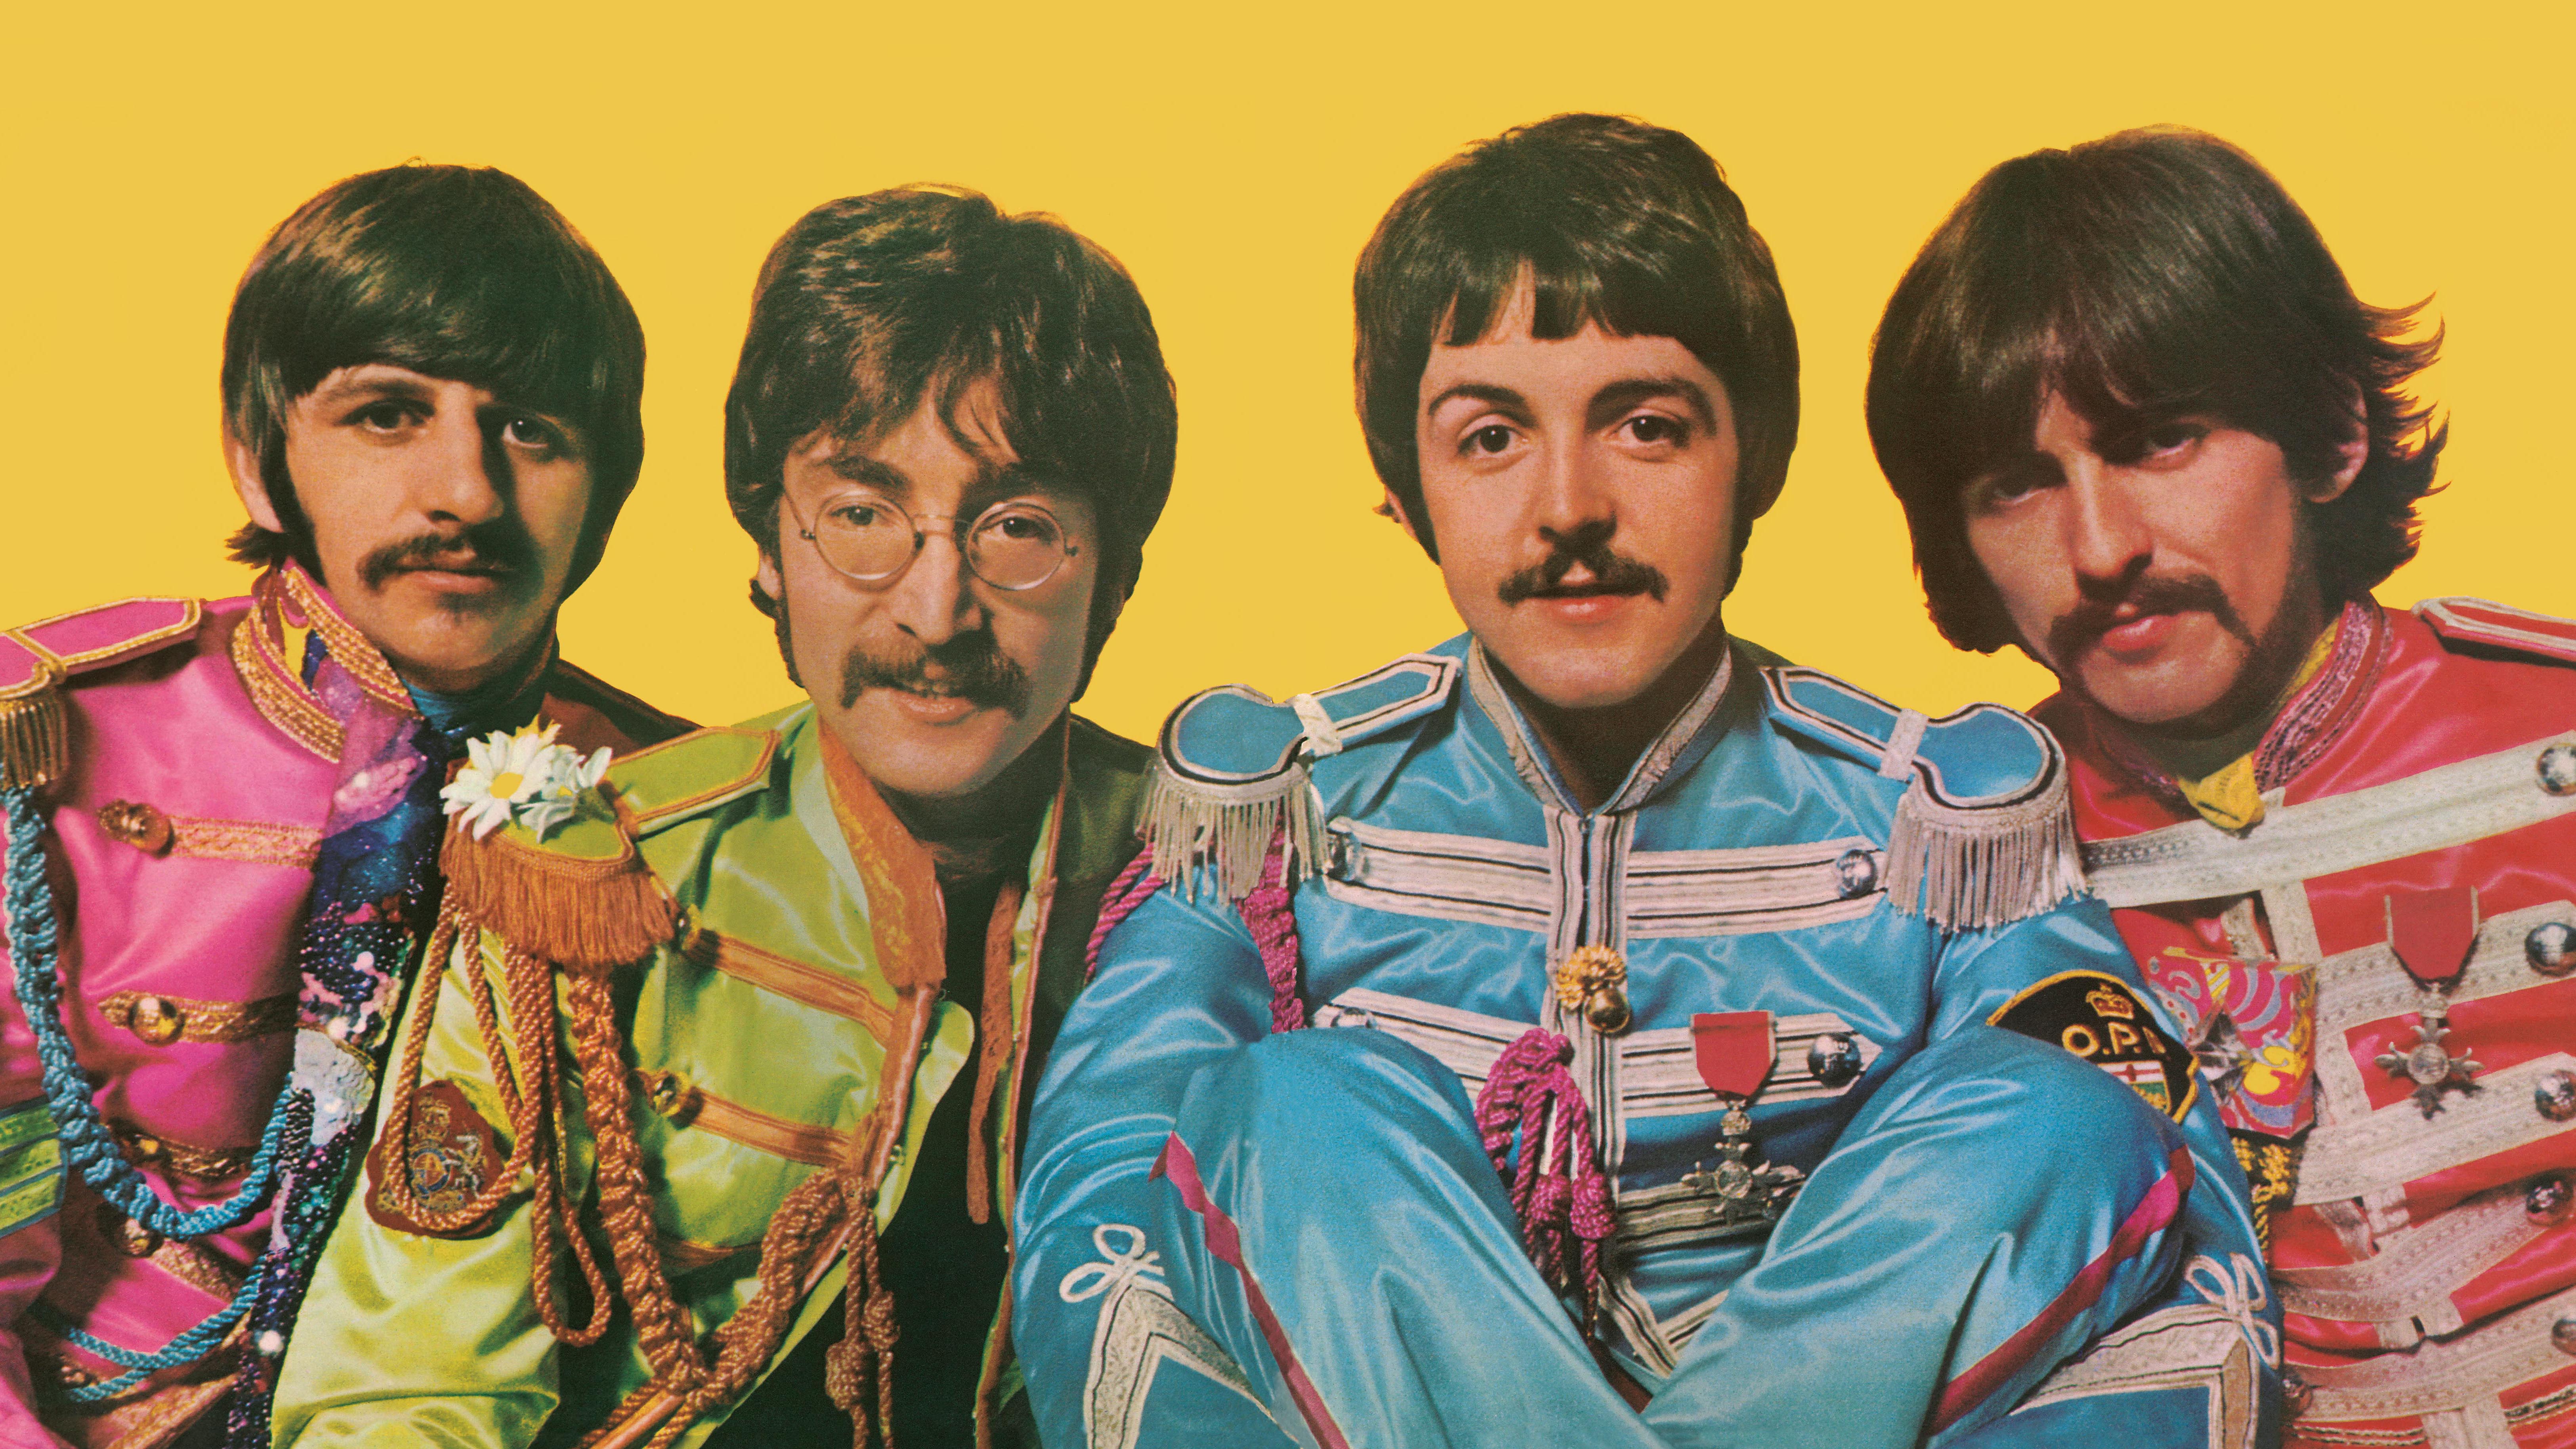 Sgt. Pepper Stock Image